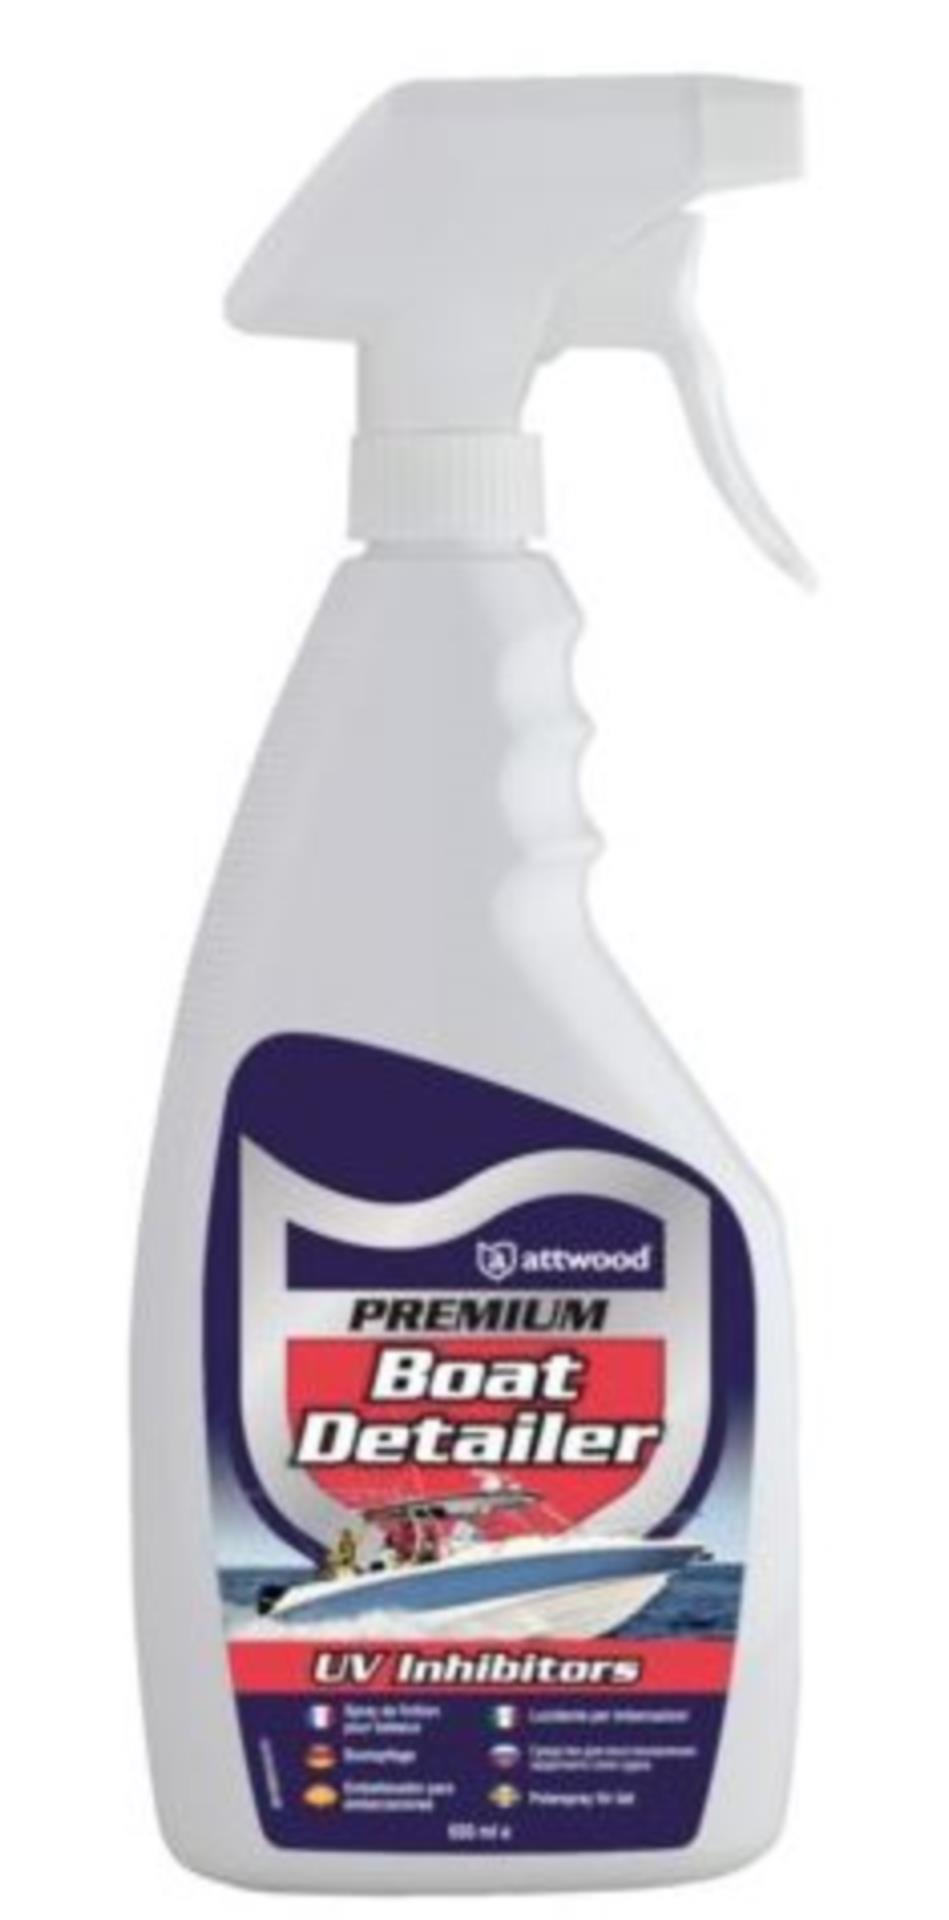 Attwood Premium Boat Detailer / Bootspflege  650ml